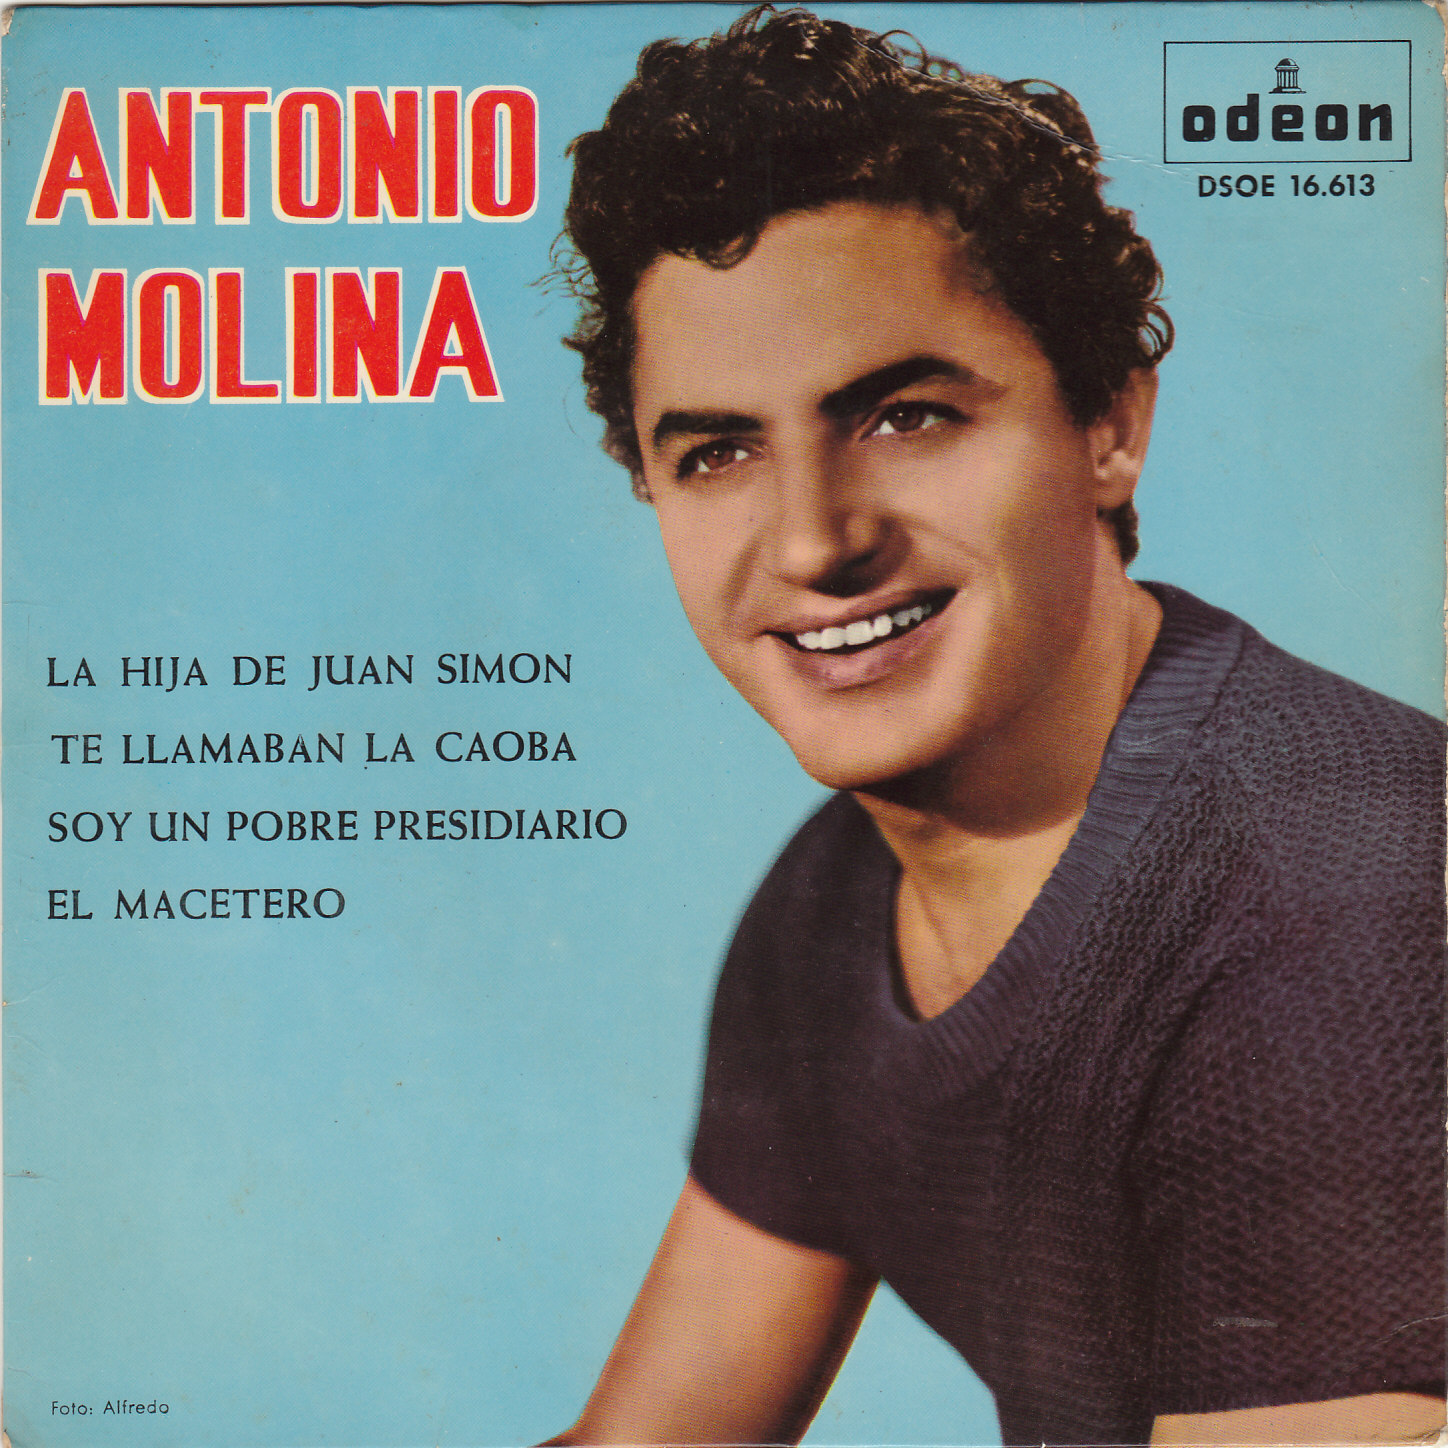 Discografia Completa Antonio Molina Rar